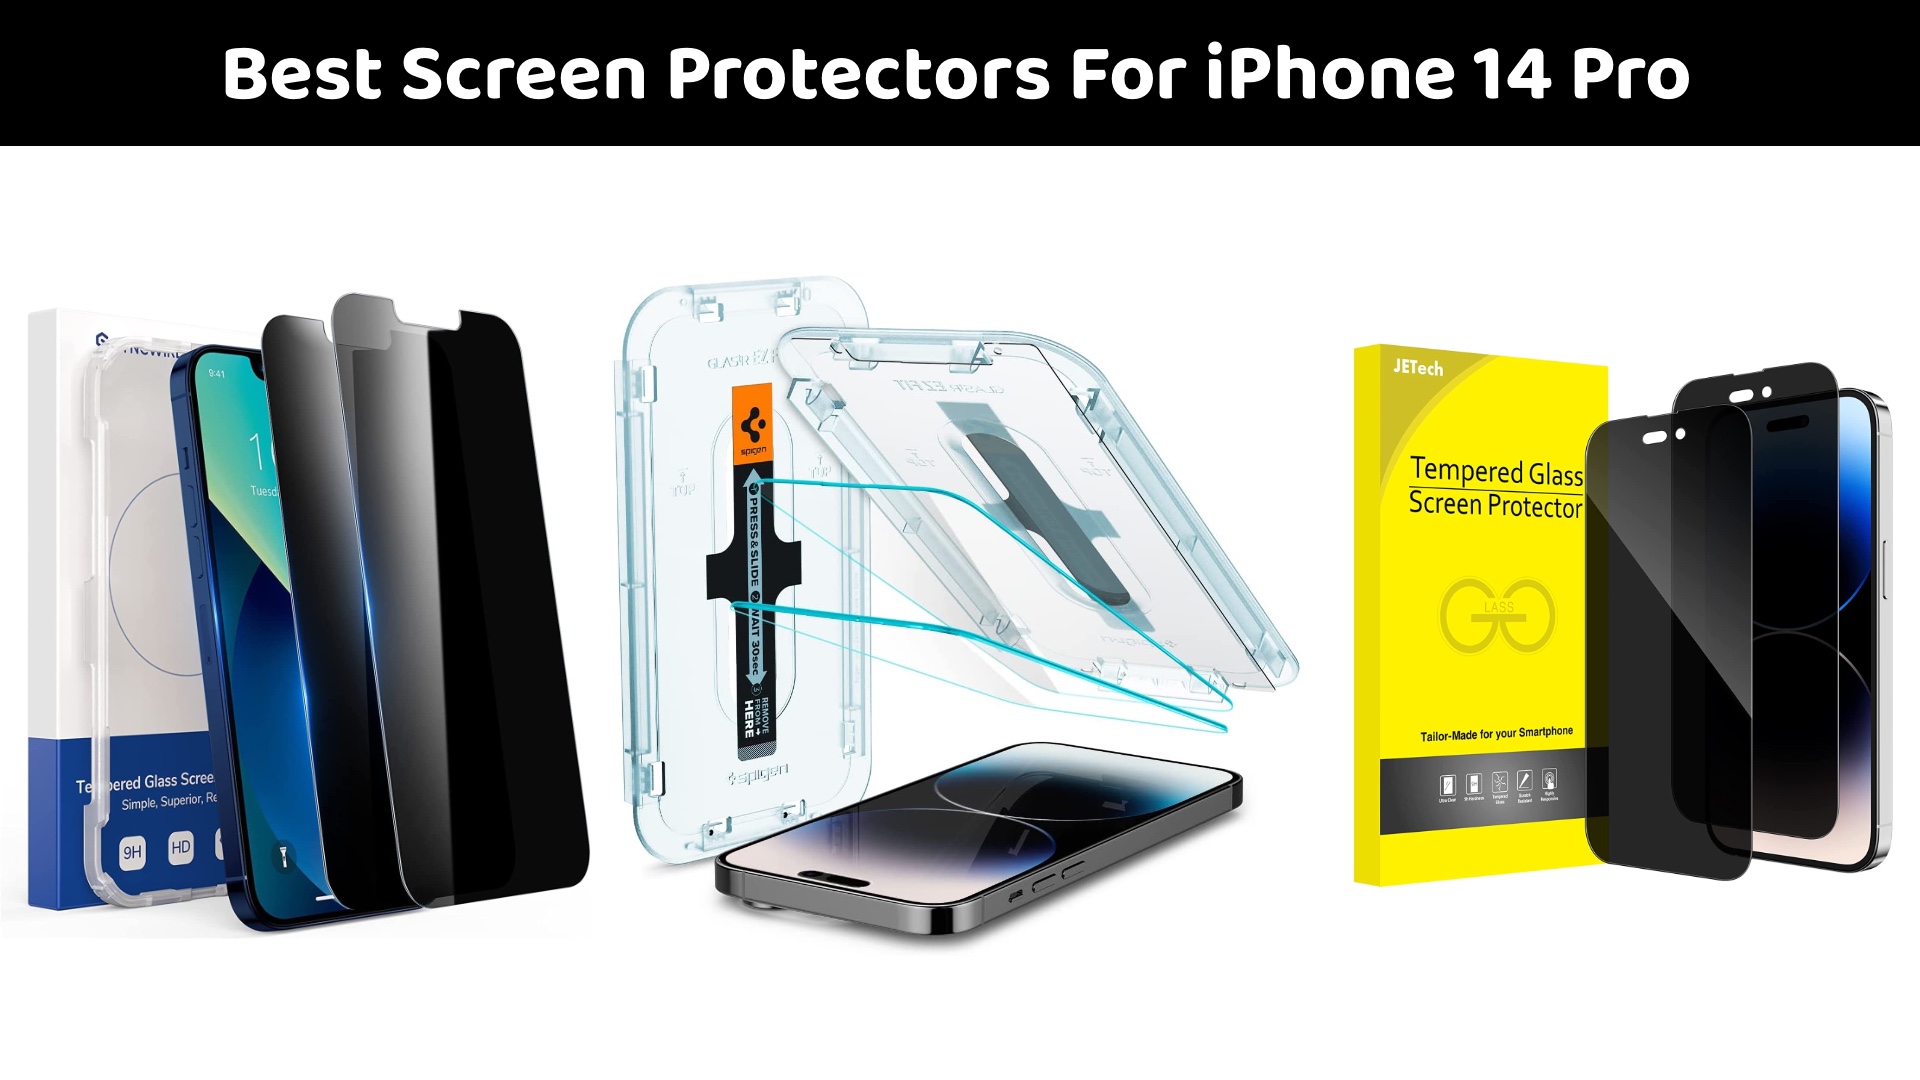 https://ioshacker.com/wp-content/uploads/2022/11/Best-Screen-Protector-for-iPhone-14-Pro.jpg